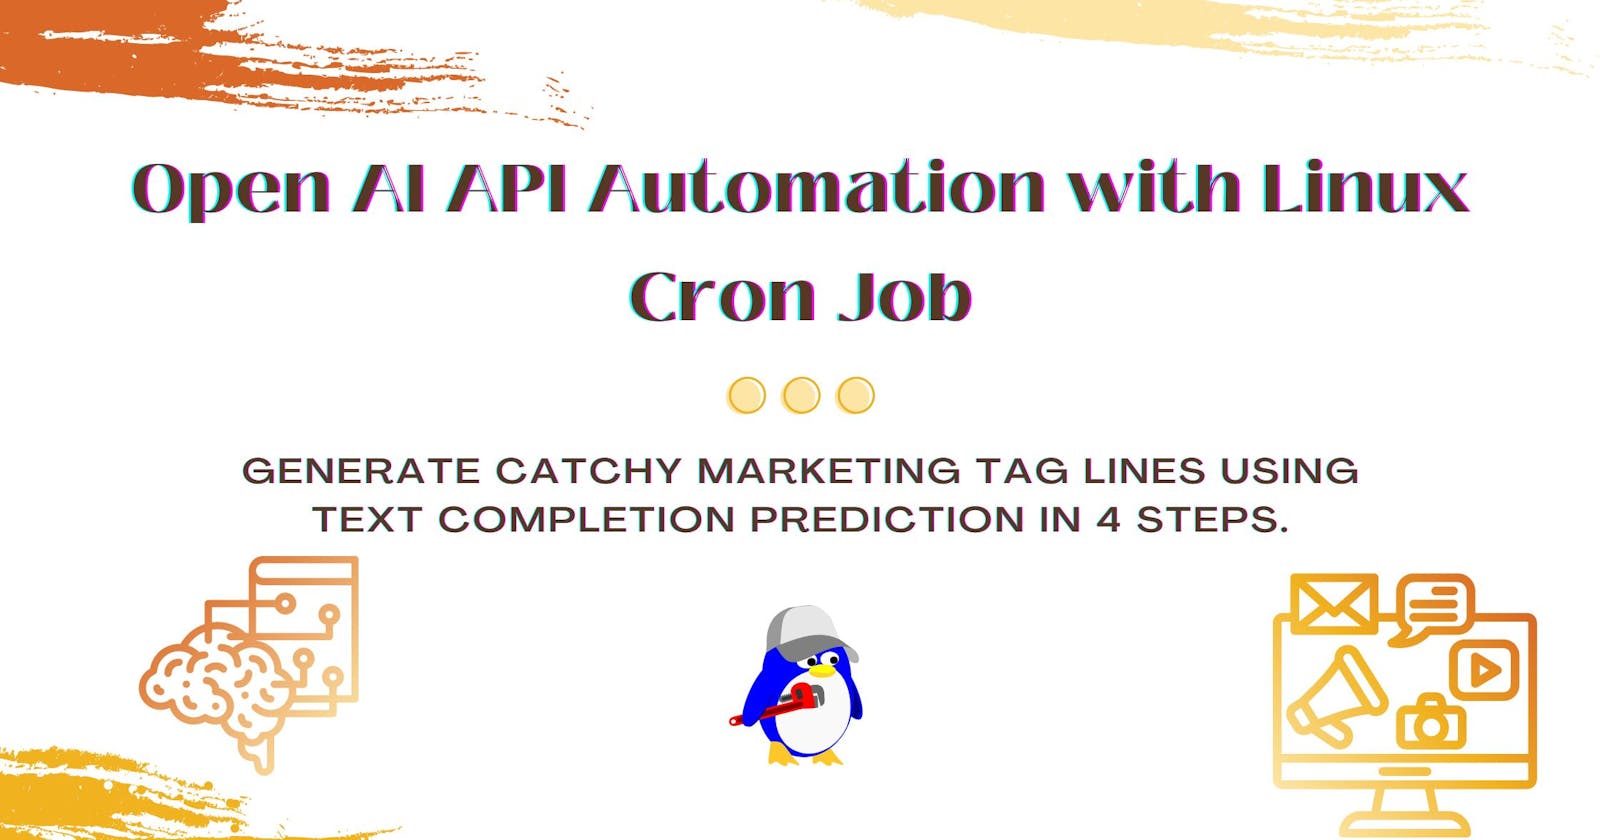 Open AI API Automation with Linux Cron Job